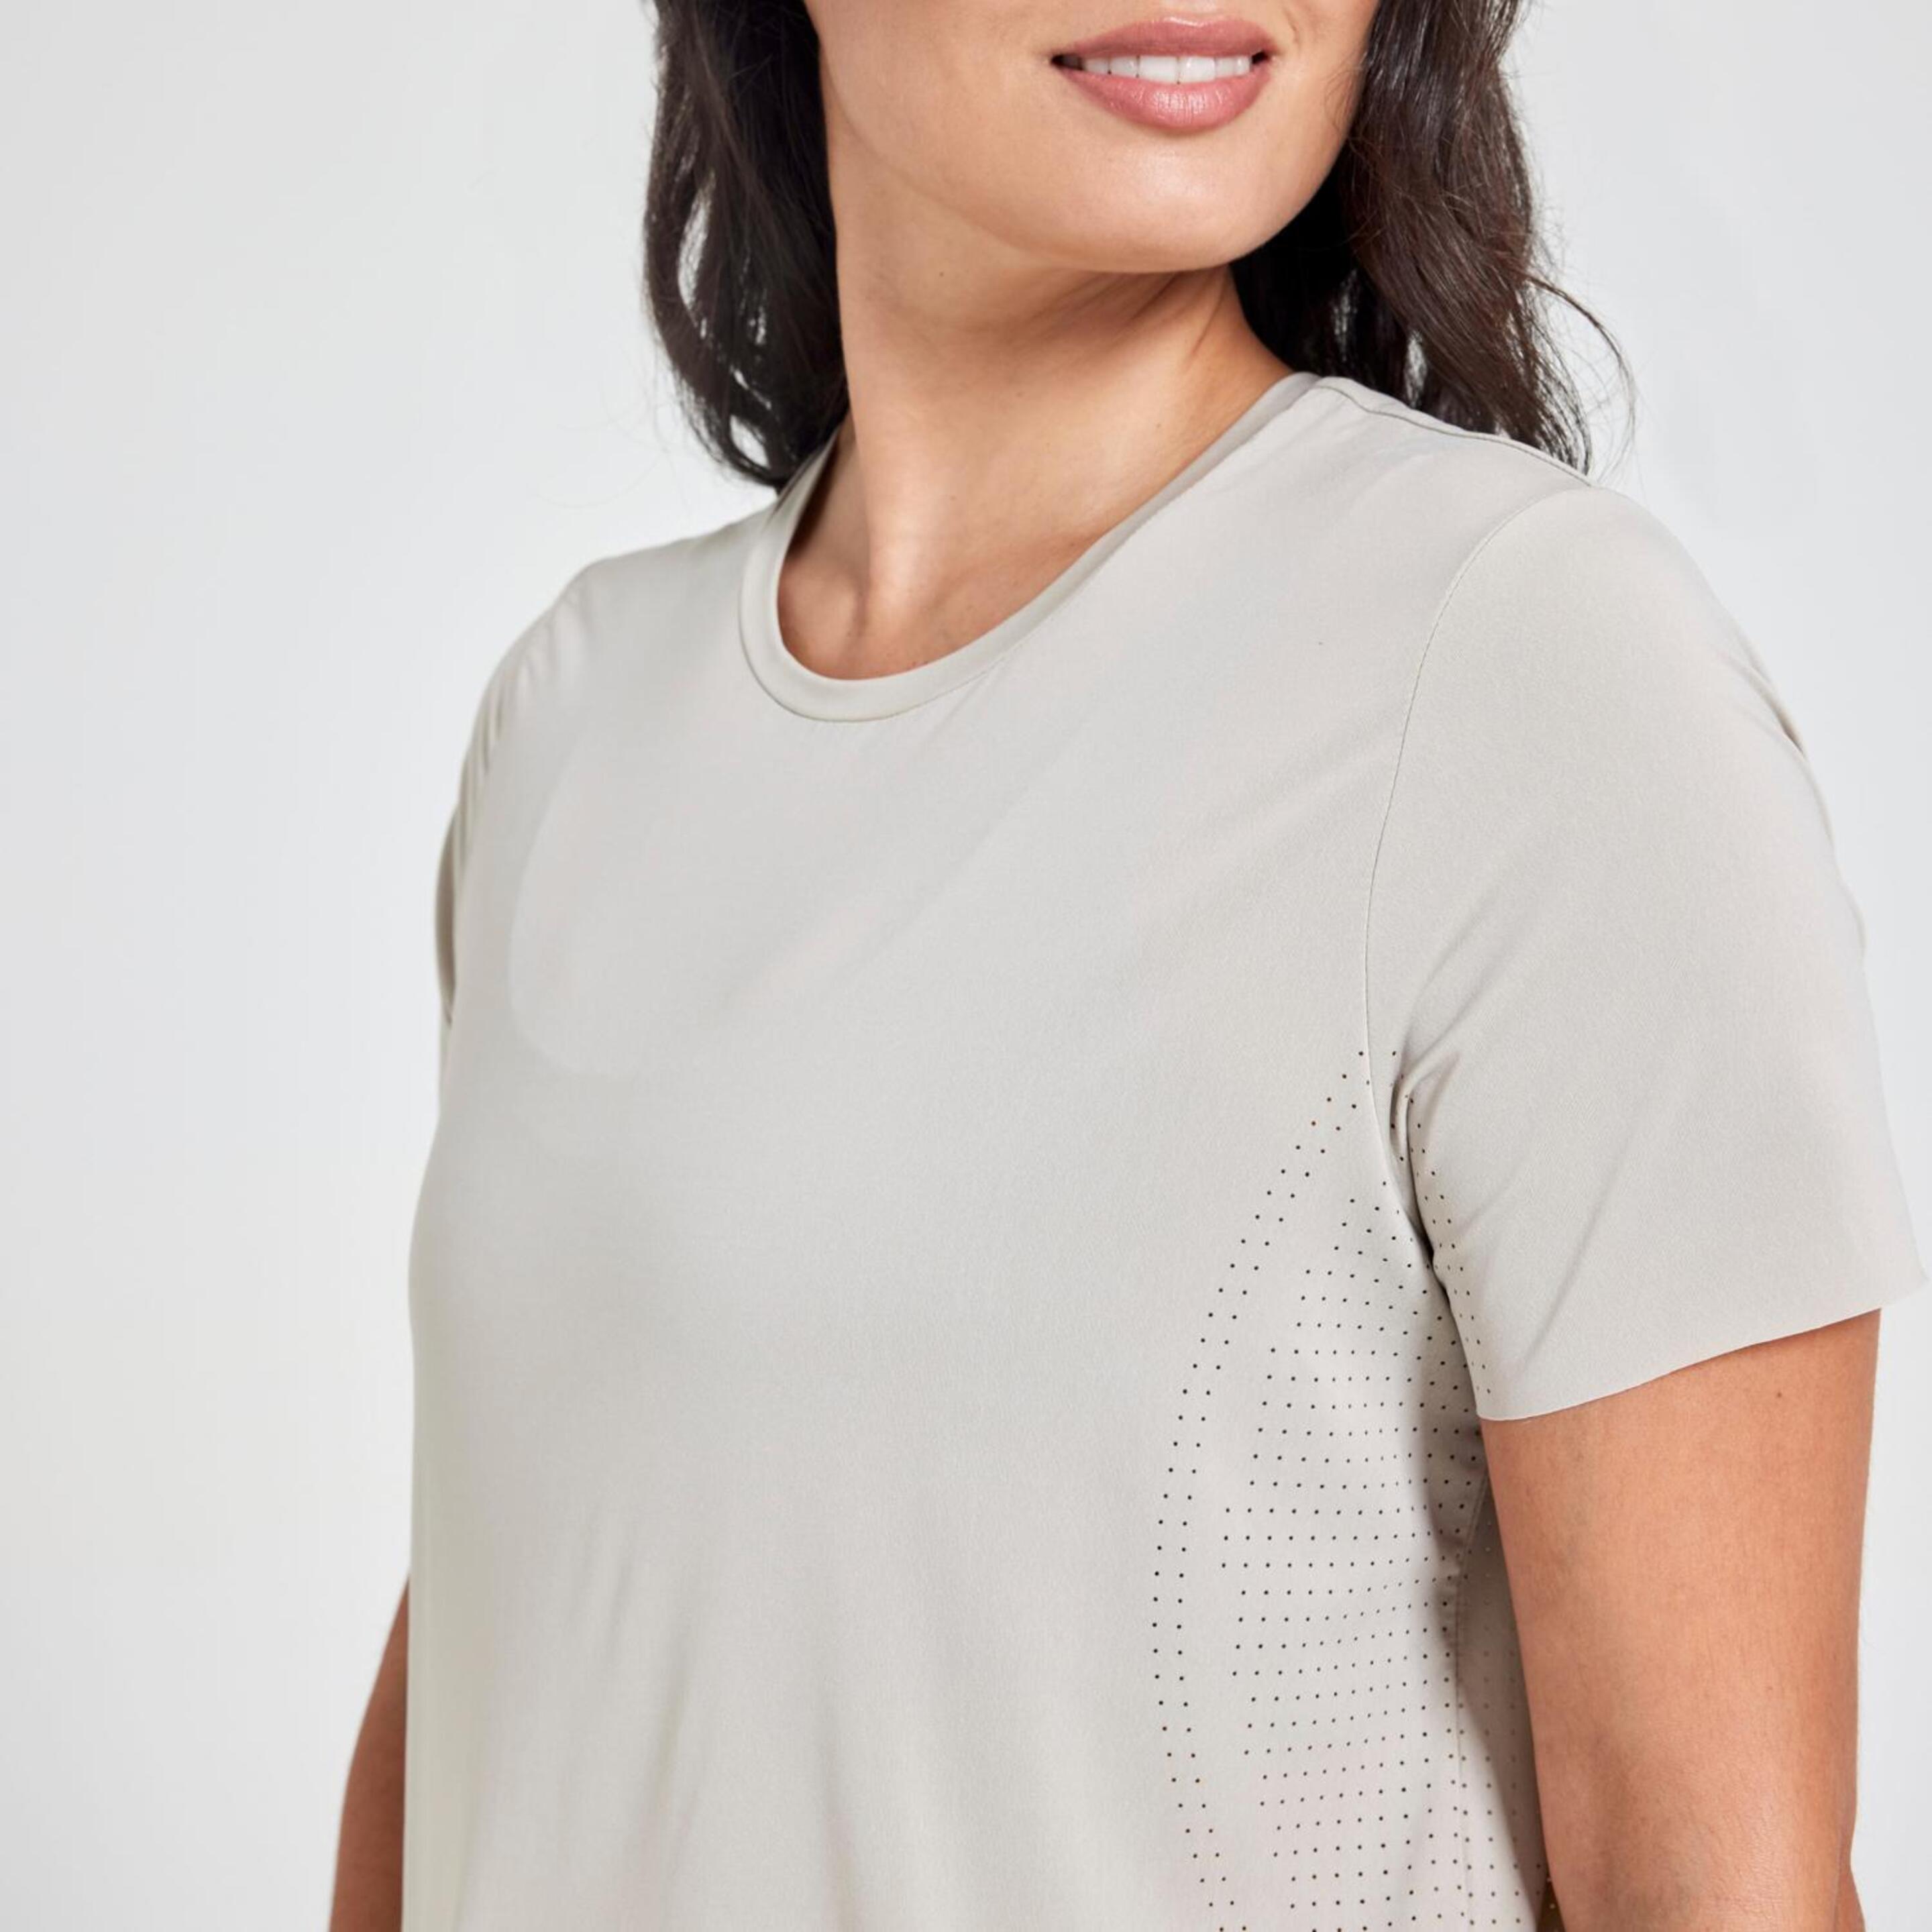 Doone Casual Luxe - Arena - Camiseta Mujer